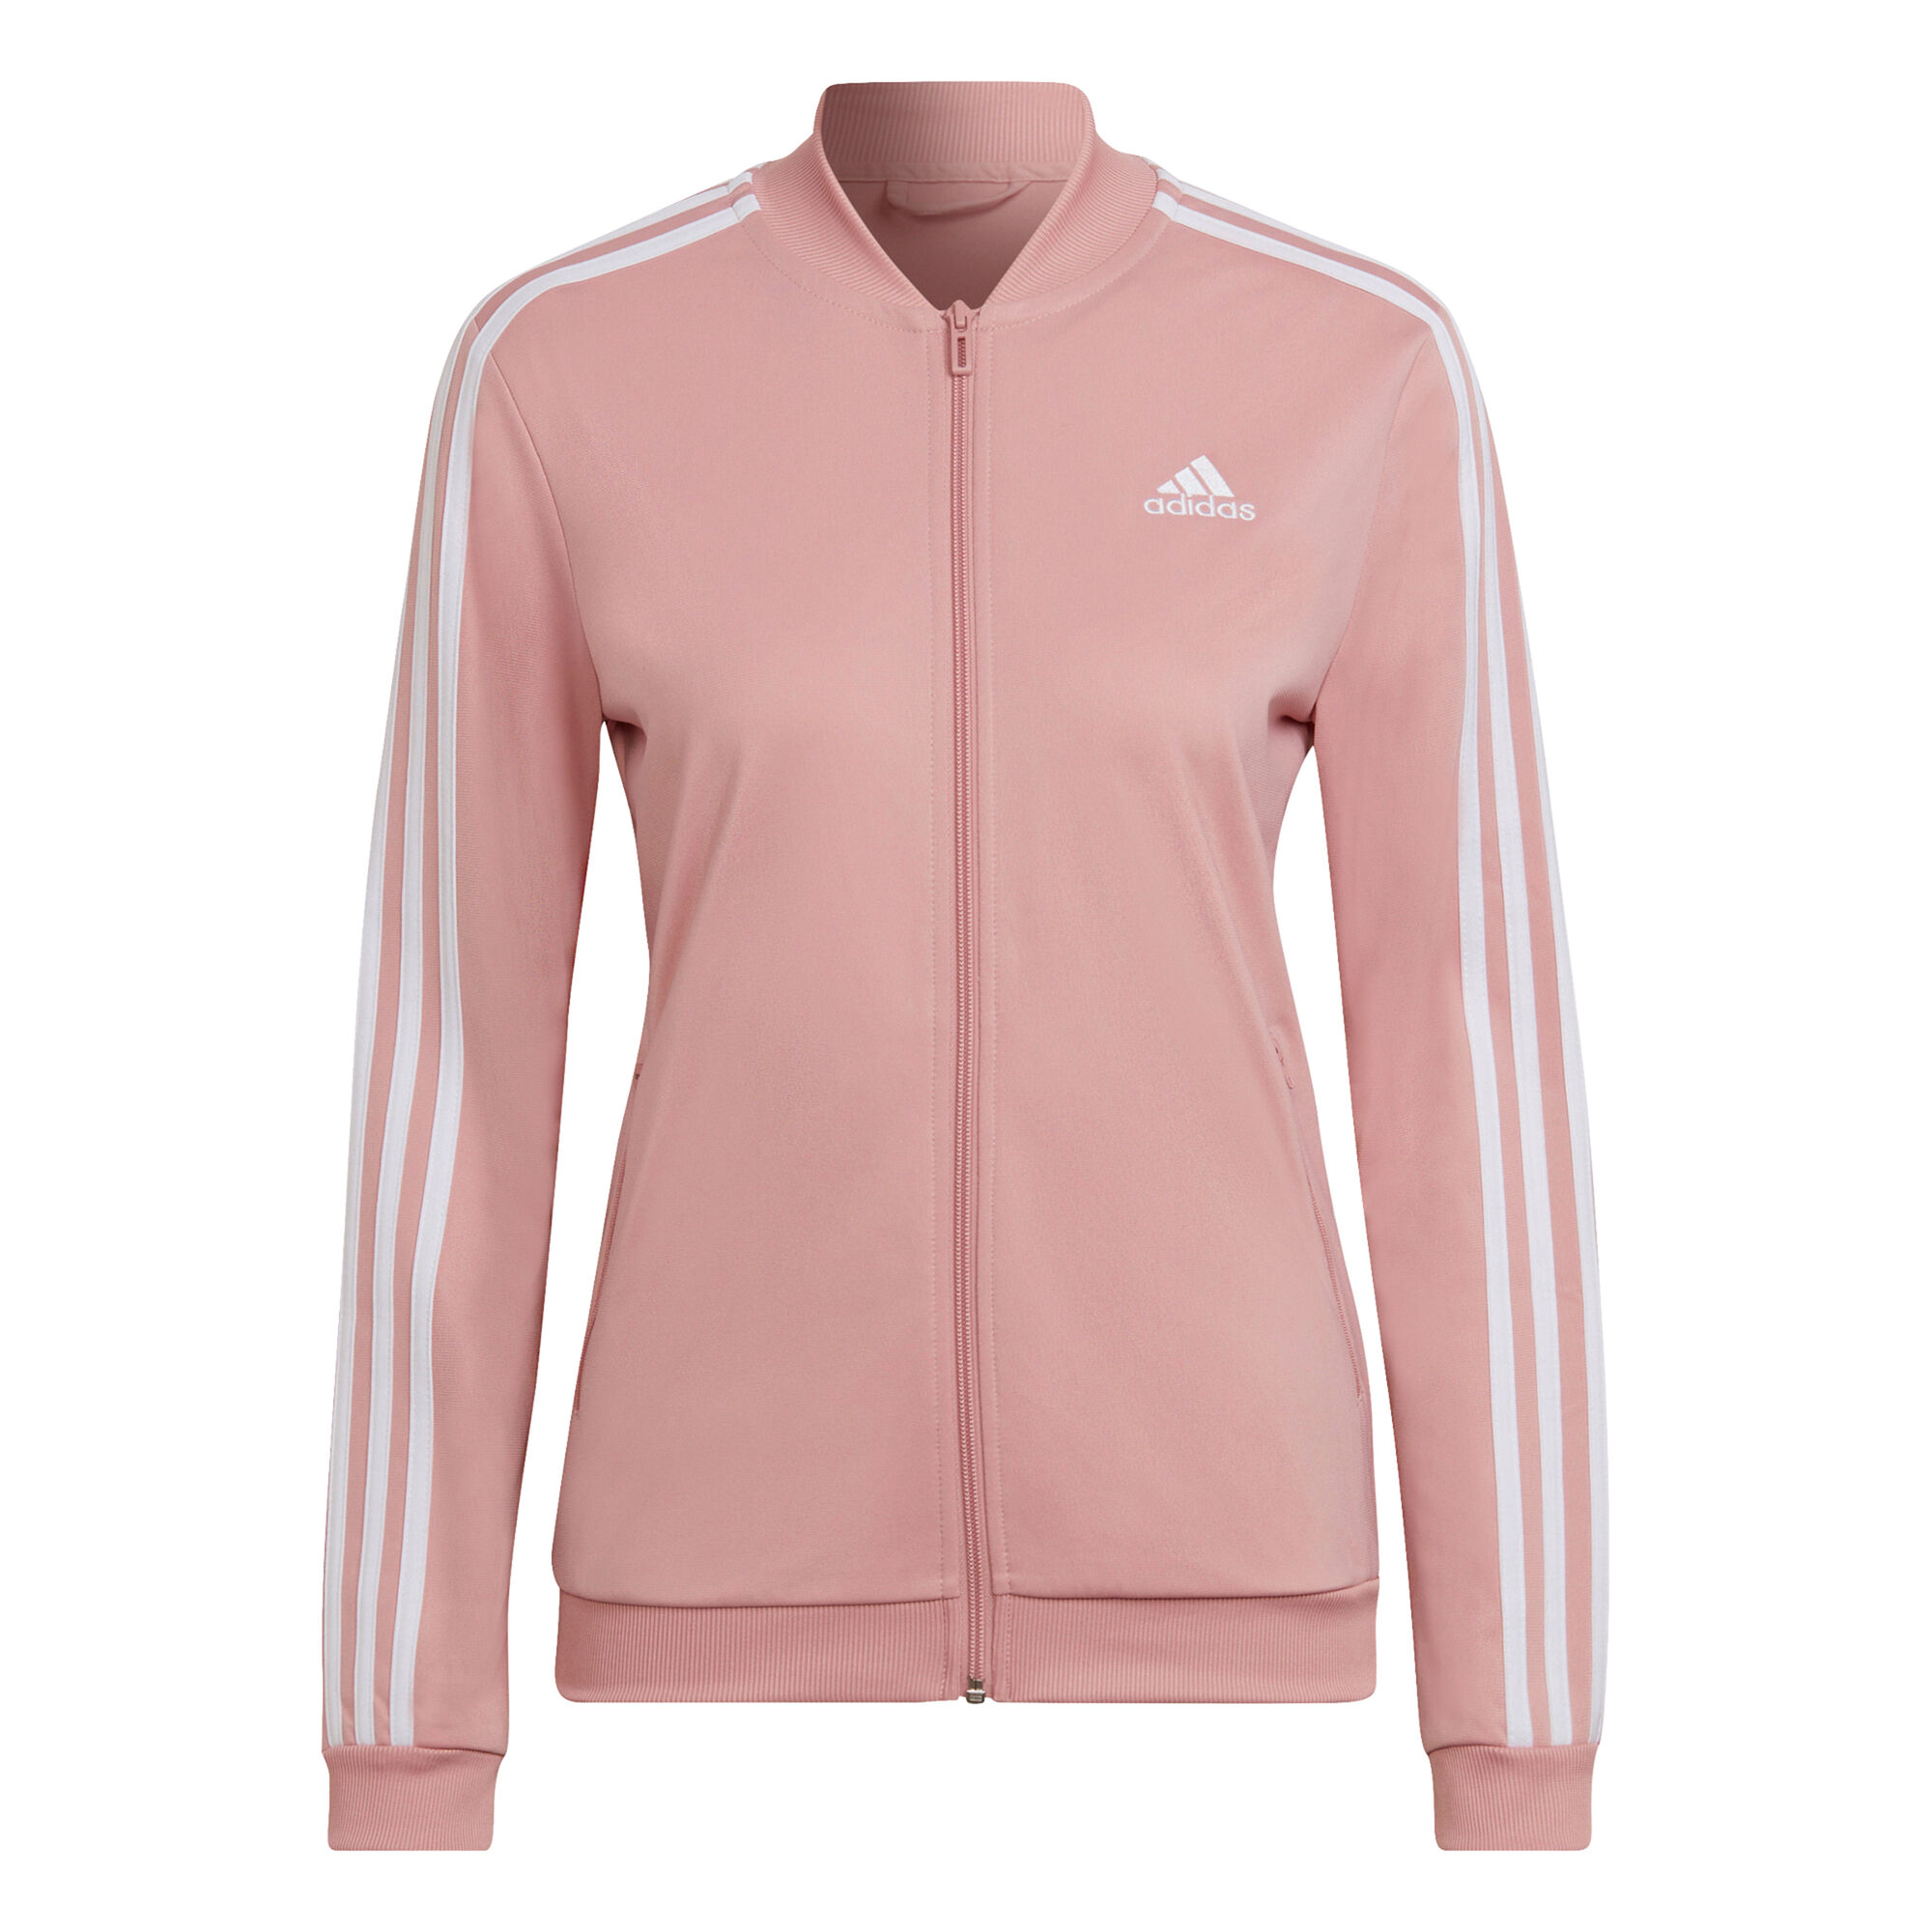 module gemeenschap duidelijk adidas 3 Stripes Trainingspak Dames - Roze, Rood online kopen | Tennis-Point